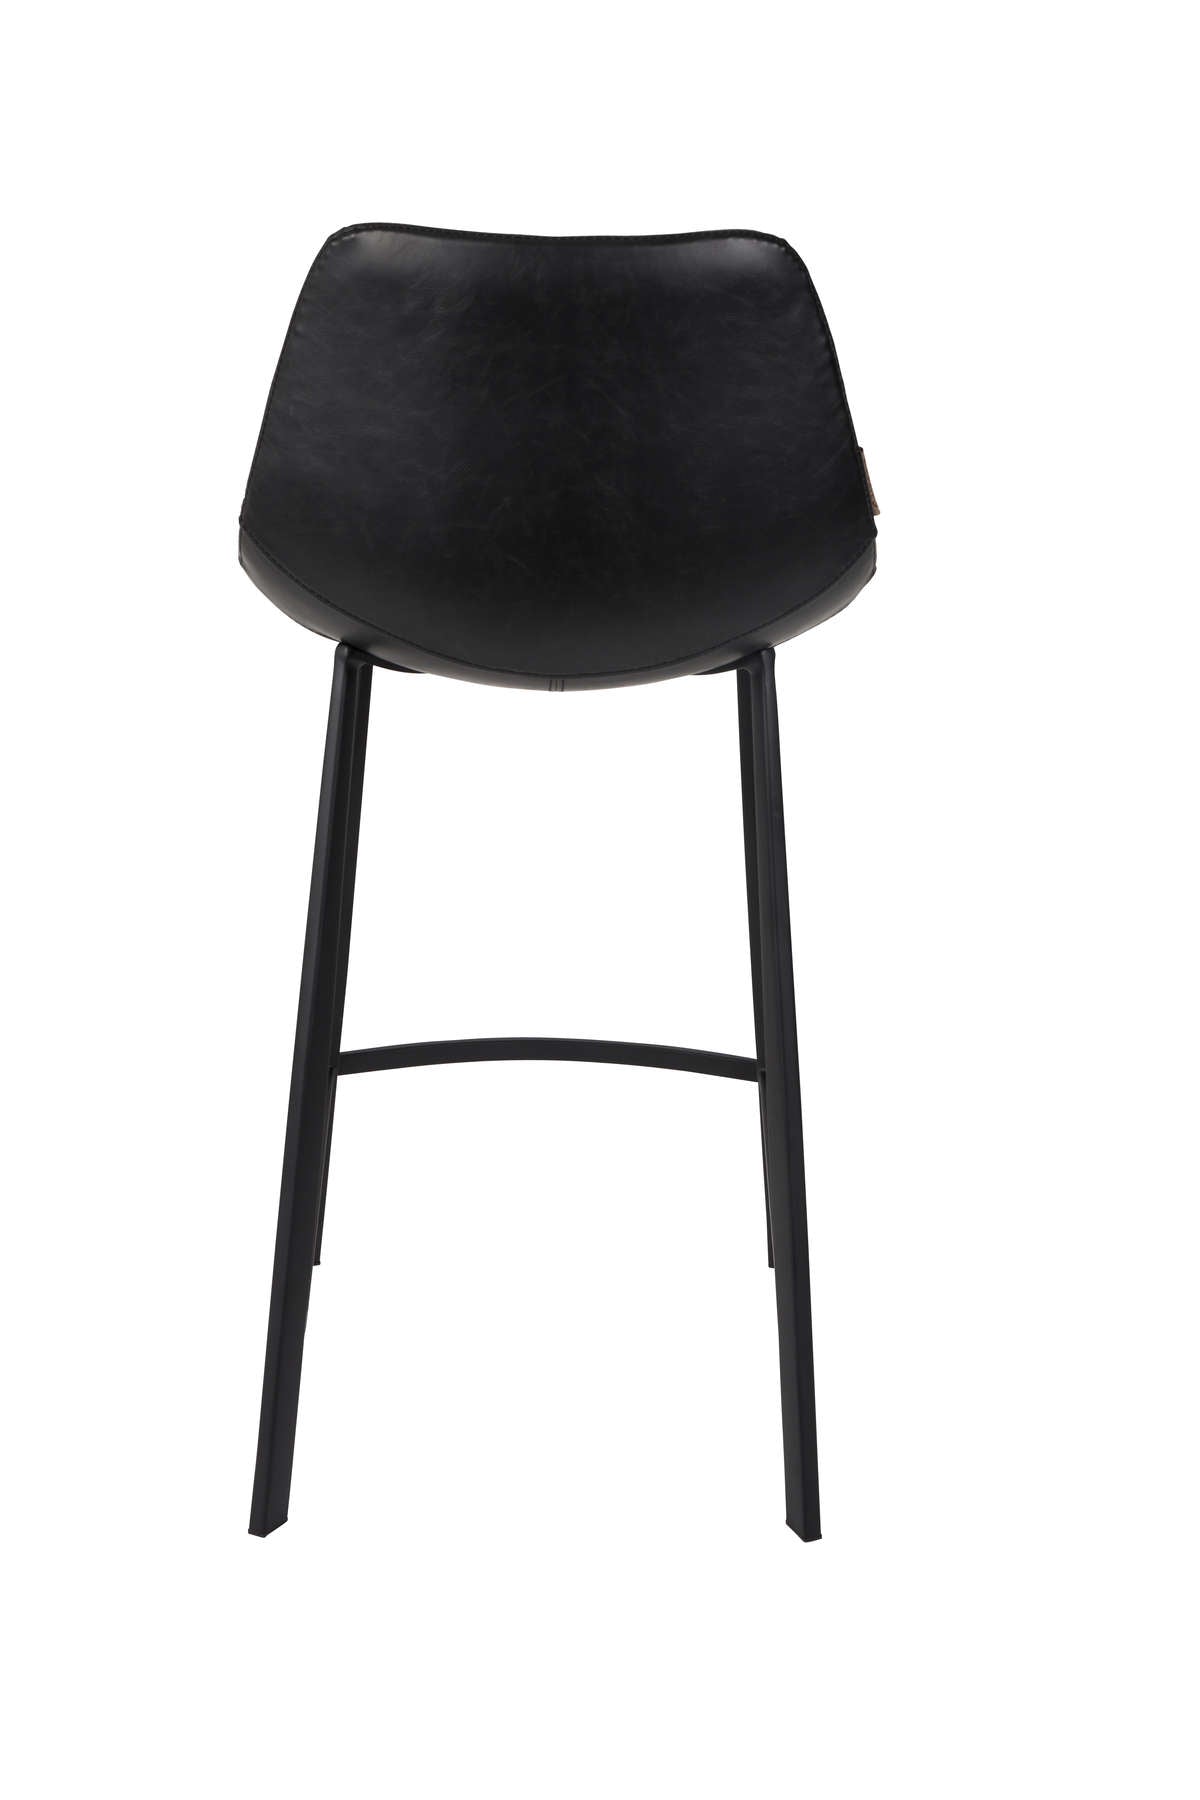 Bar stool FRANKY 65 black, Dutchbone, Eye on Design